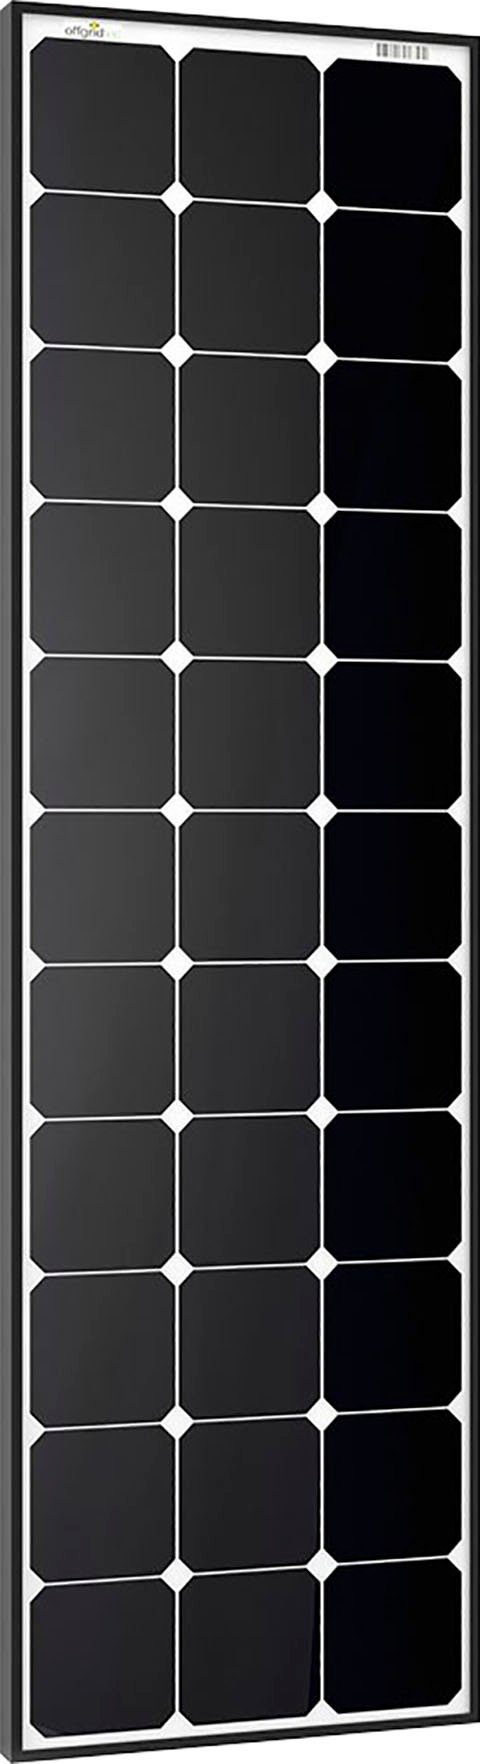 offgridtec Solarmodul SPR-120 120W Solarpanel, wiederstandsfähiges SLIM W, High-End Monokristallin, extrem 12V 120 ESG-Glas